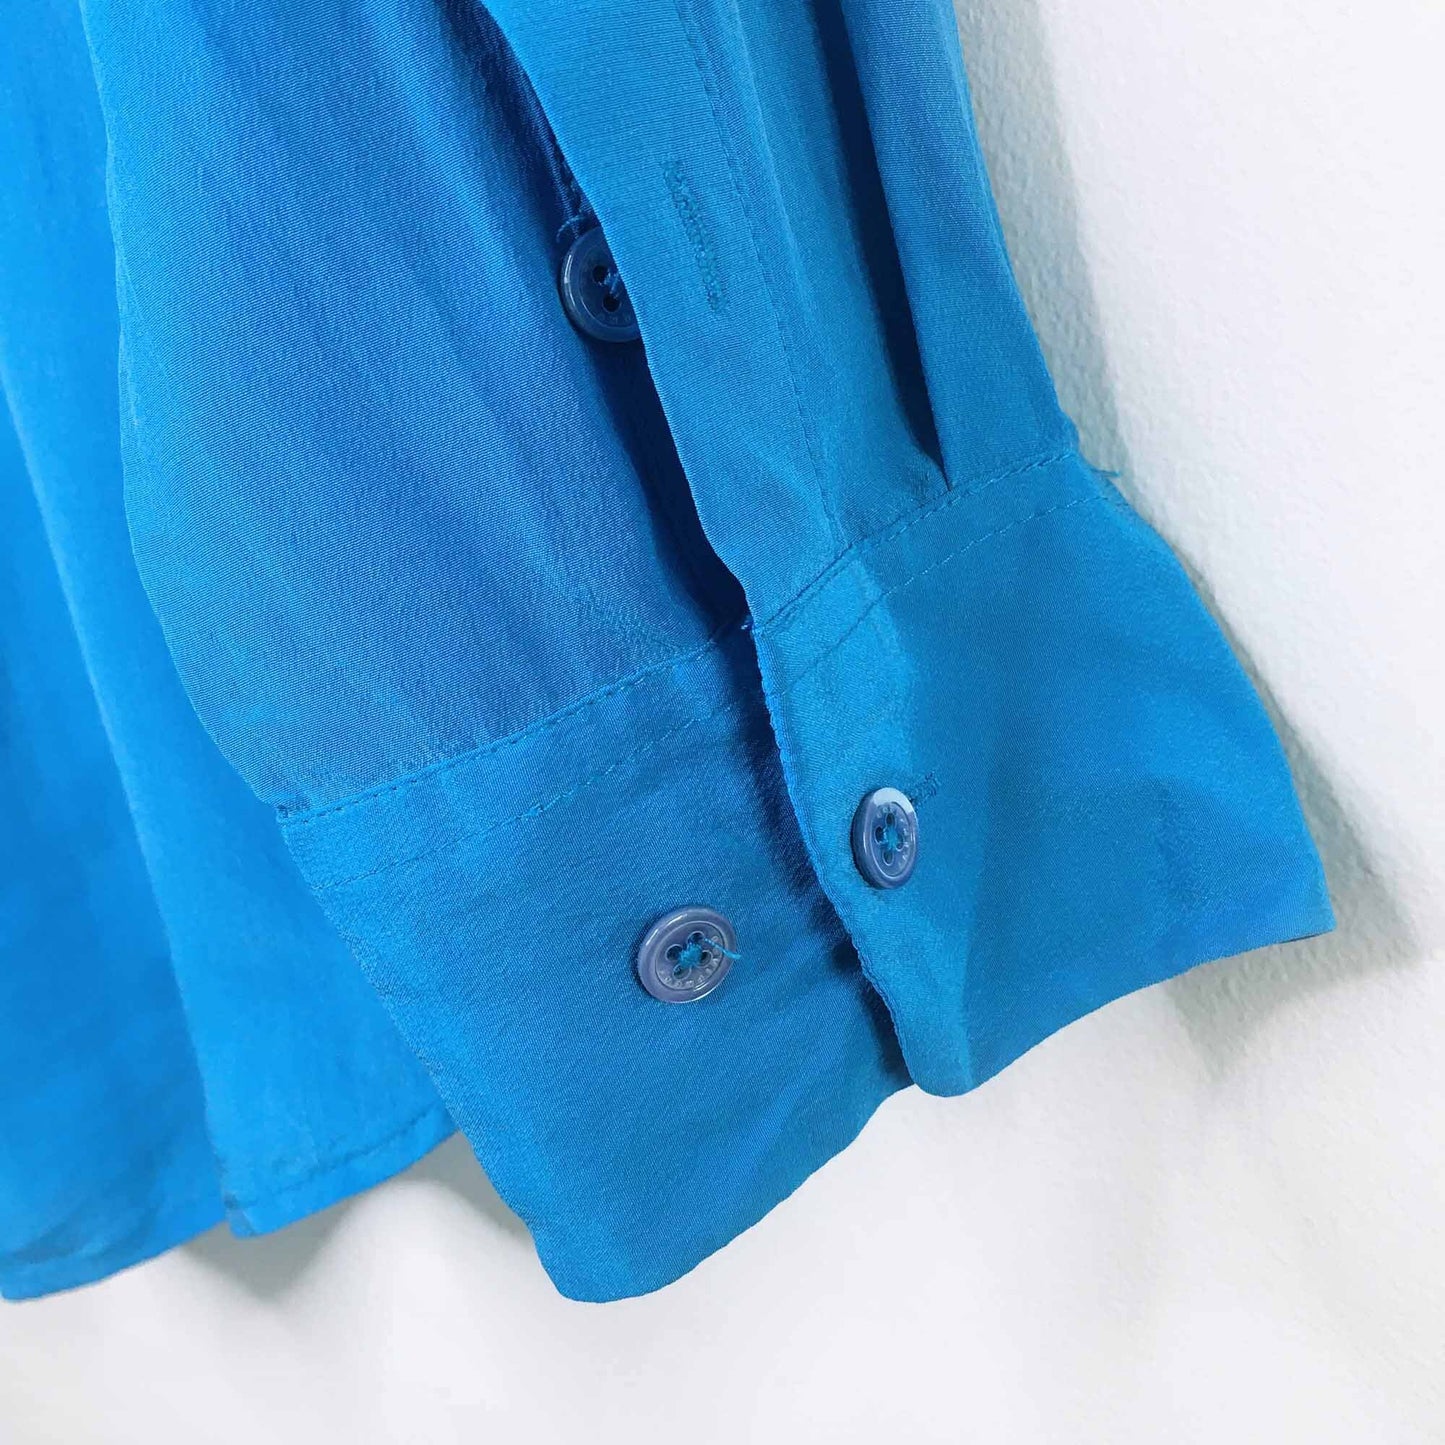 Equipment Femme electric blue silk button down - size Large